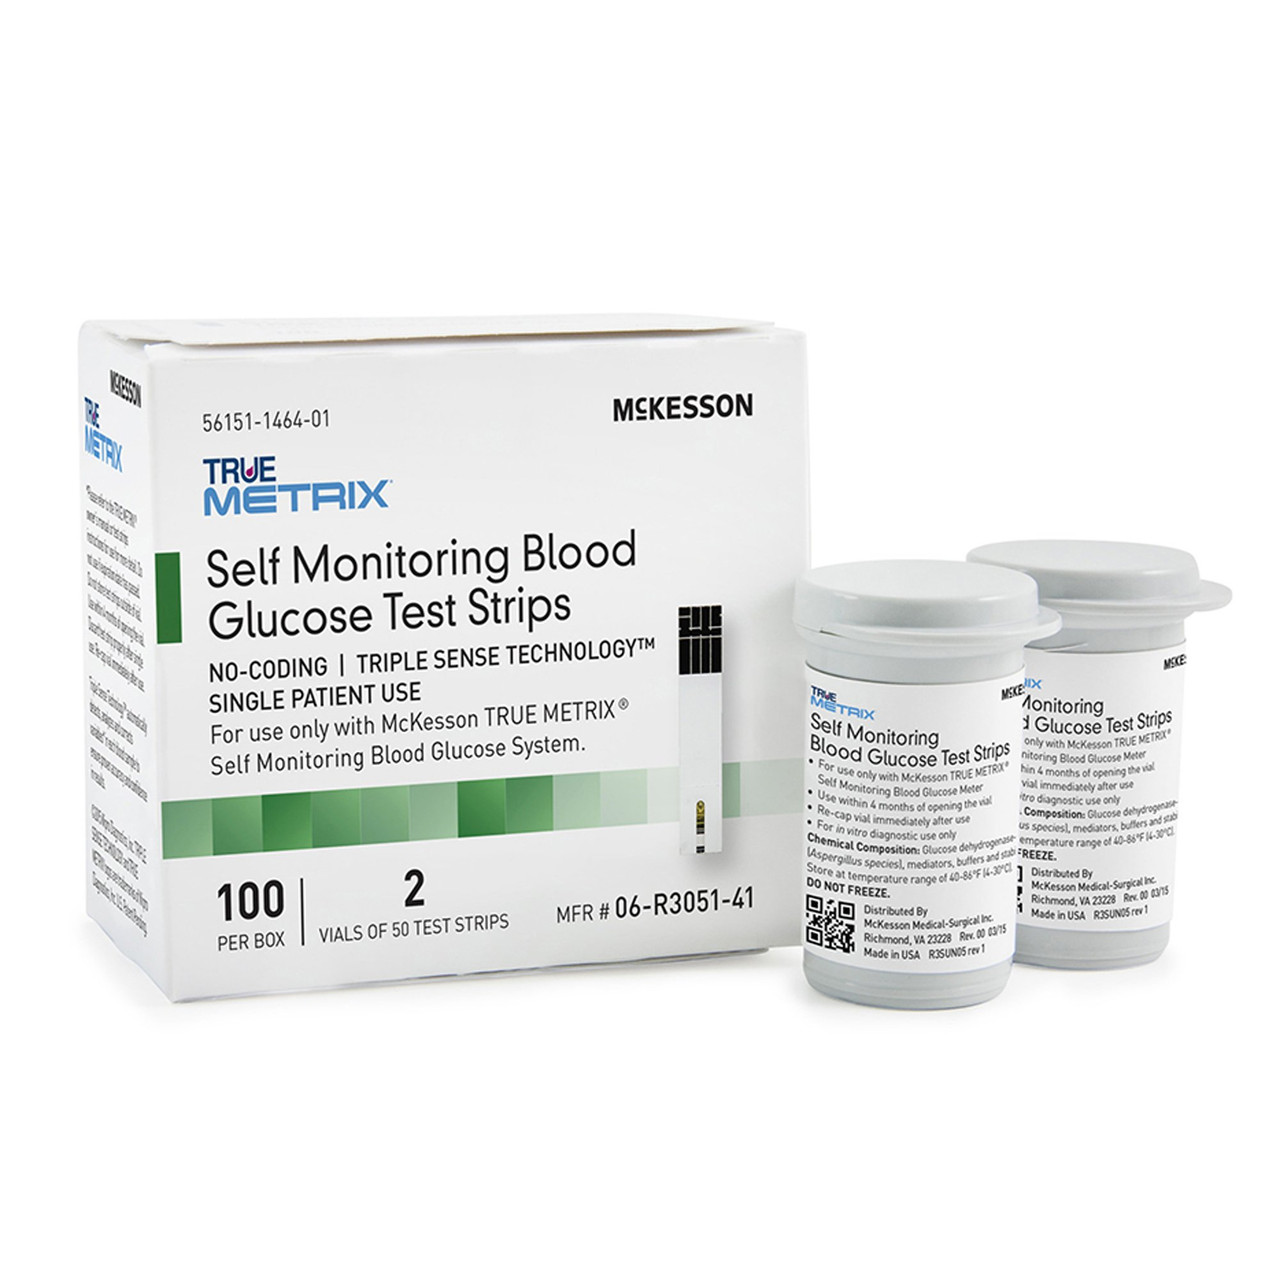 True Metrix Self Monitoring Blood Glucose System